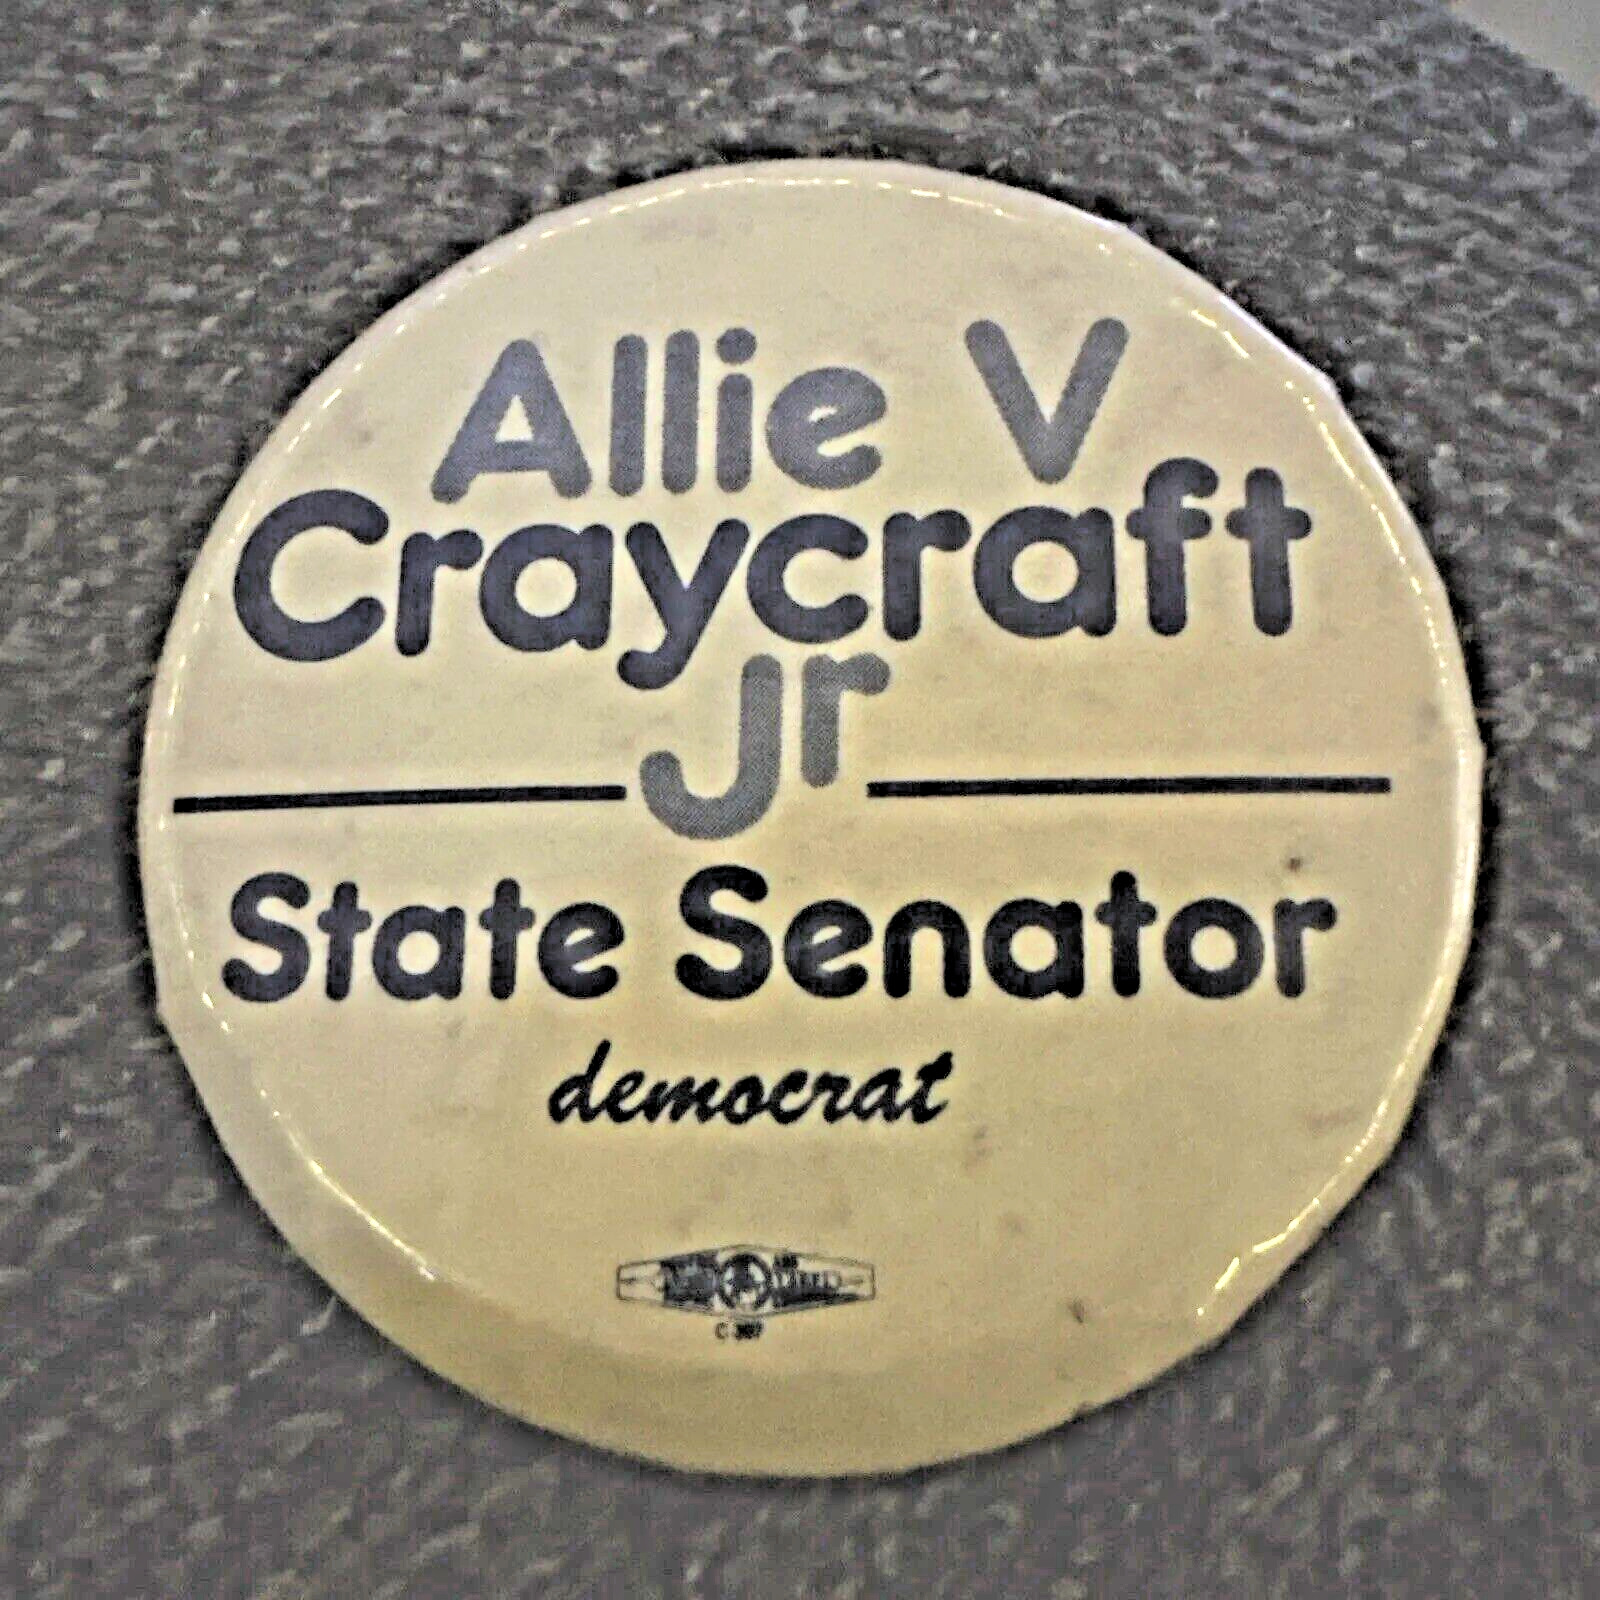 VTG Allie V Craycraft Jr  State Senator Democrat Pinback Made by Union Printers